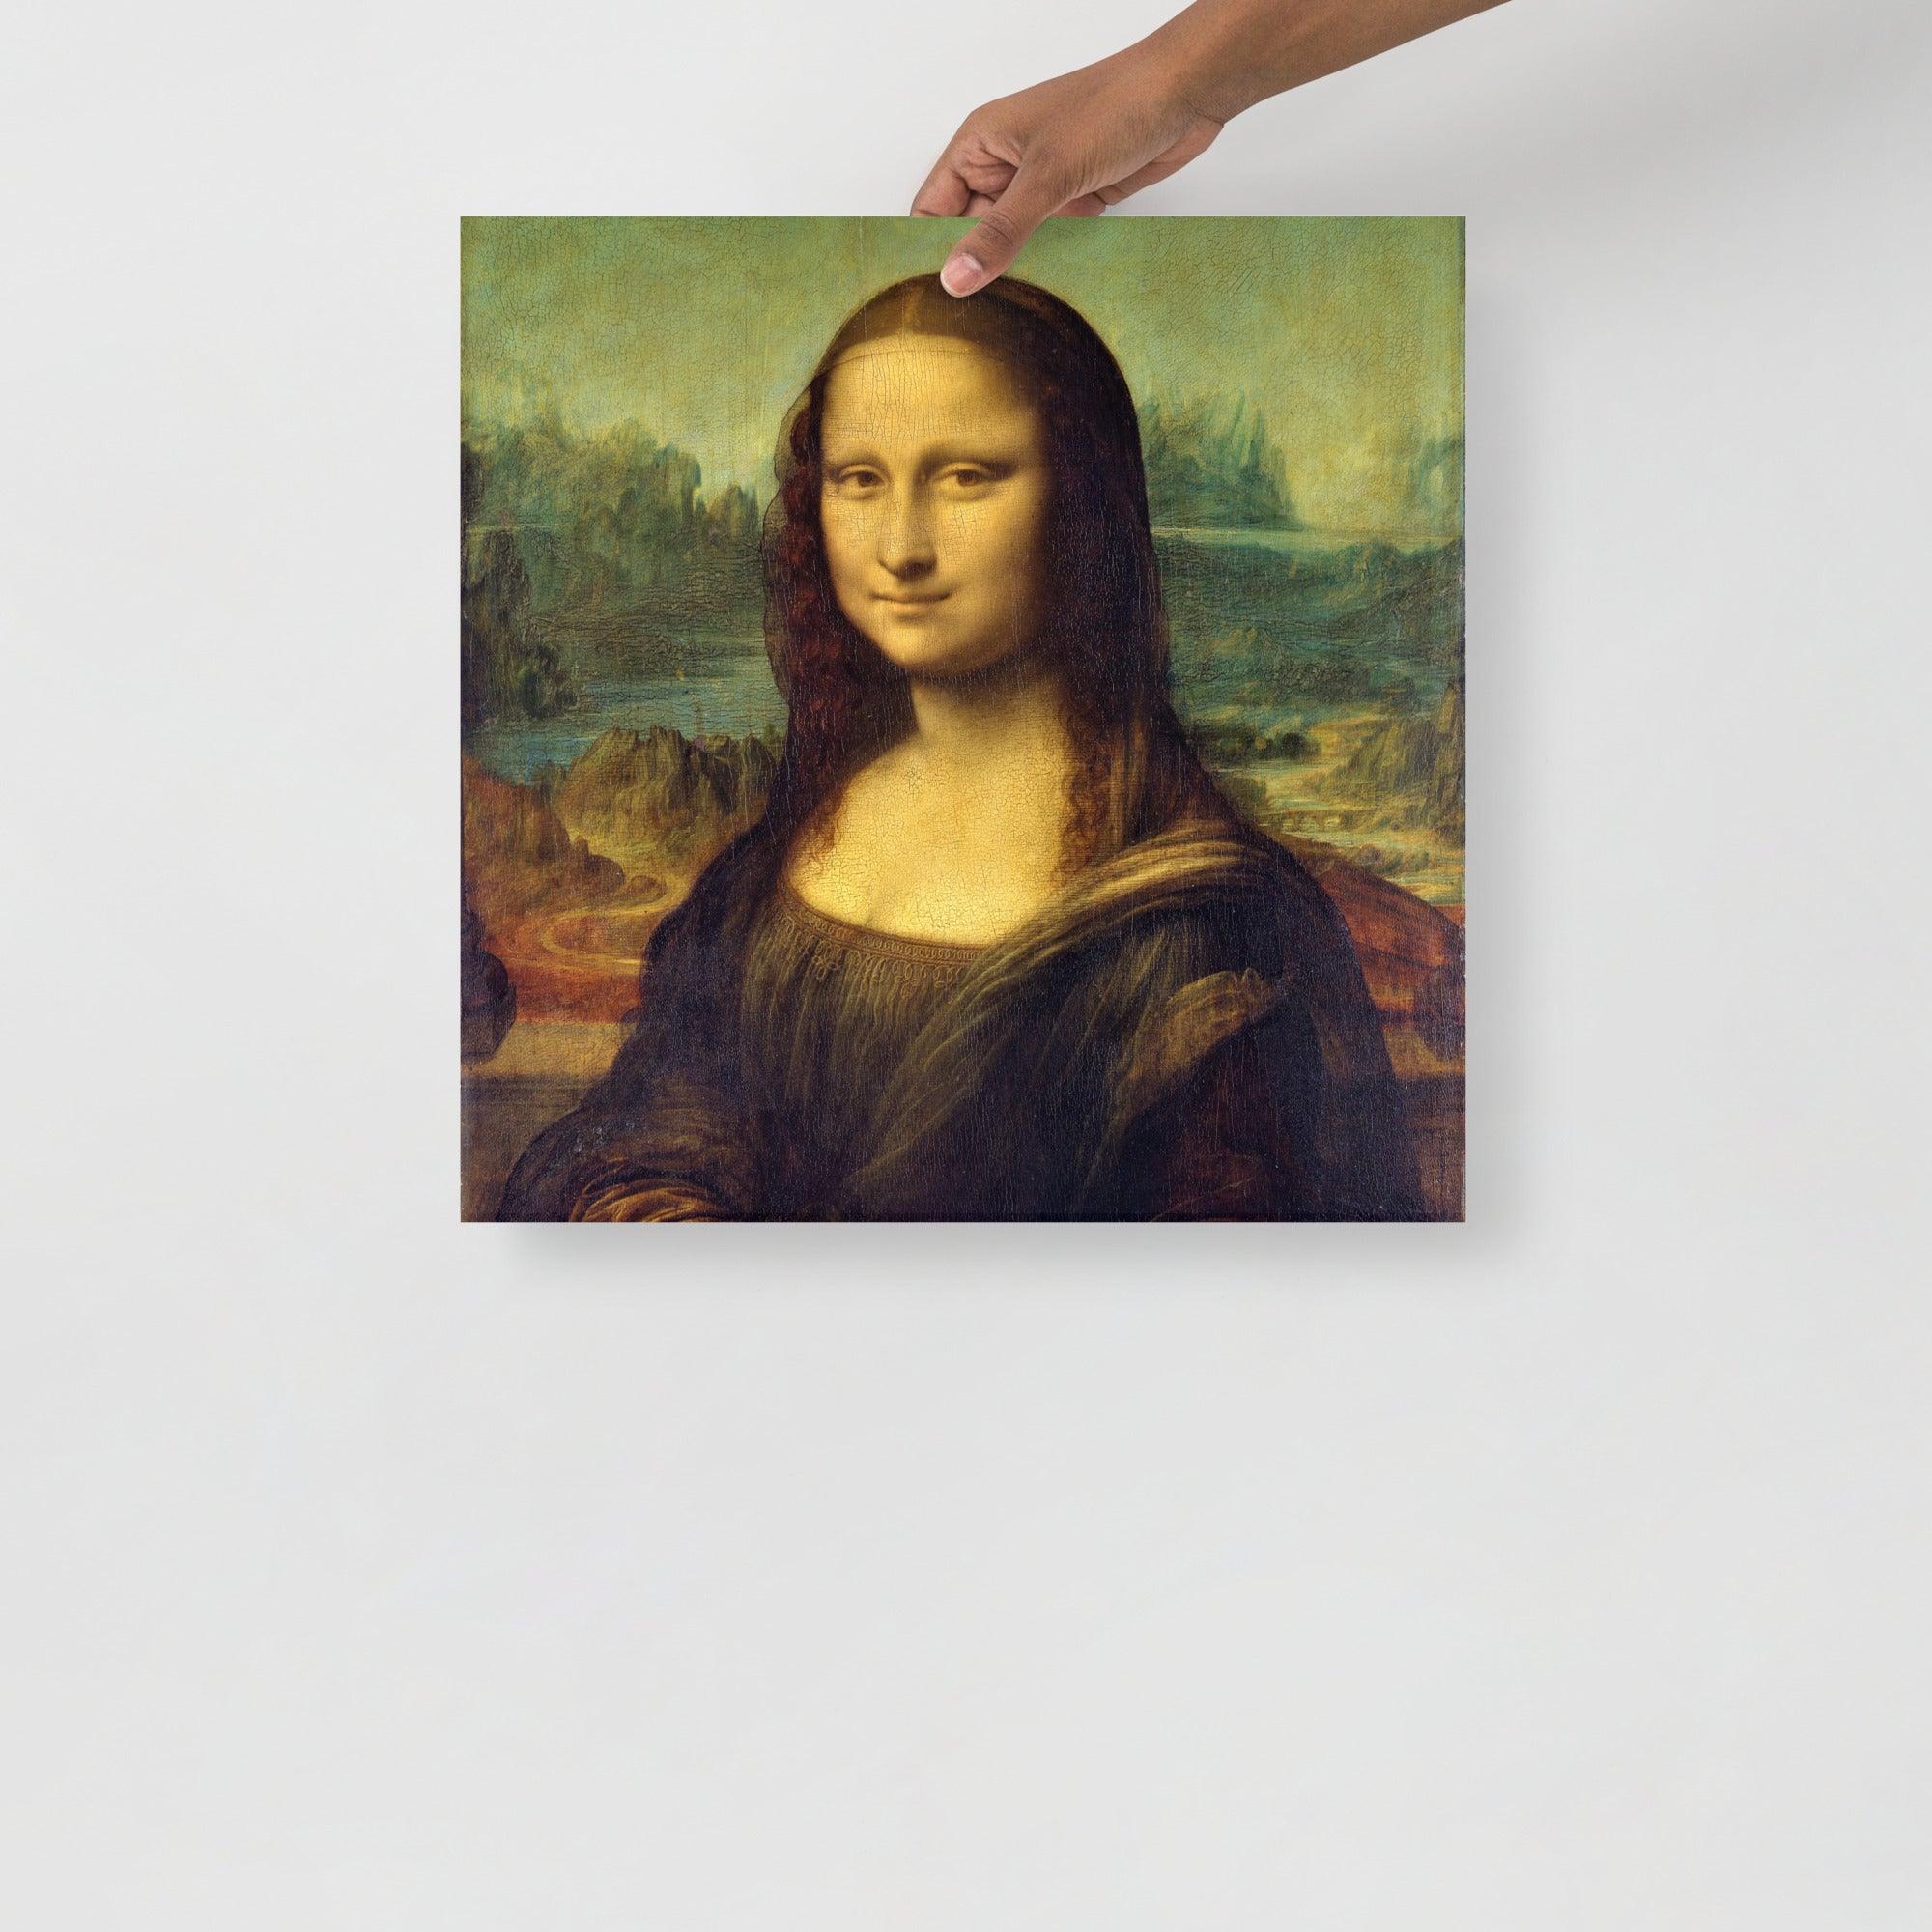 A Mona Lisa by Leonardo Da Vinci poster on a plain backdrop in size 18x18”.